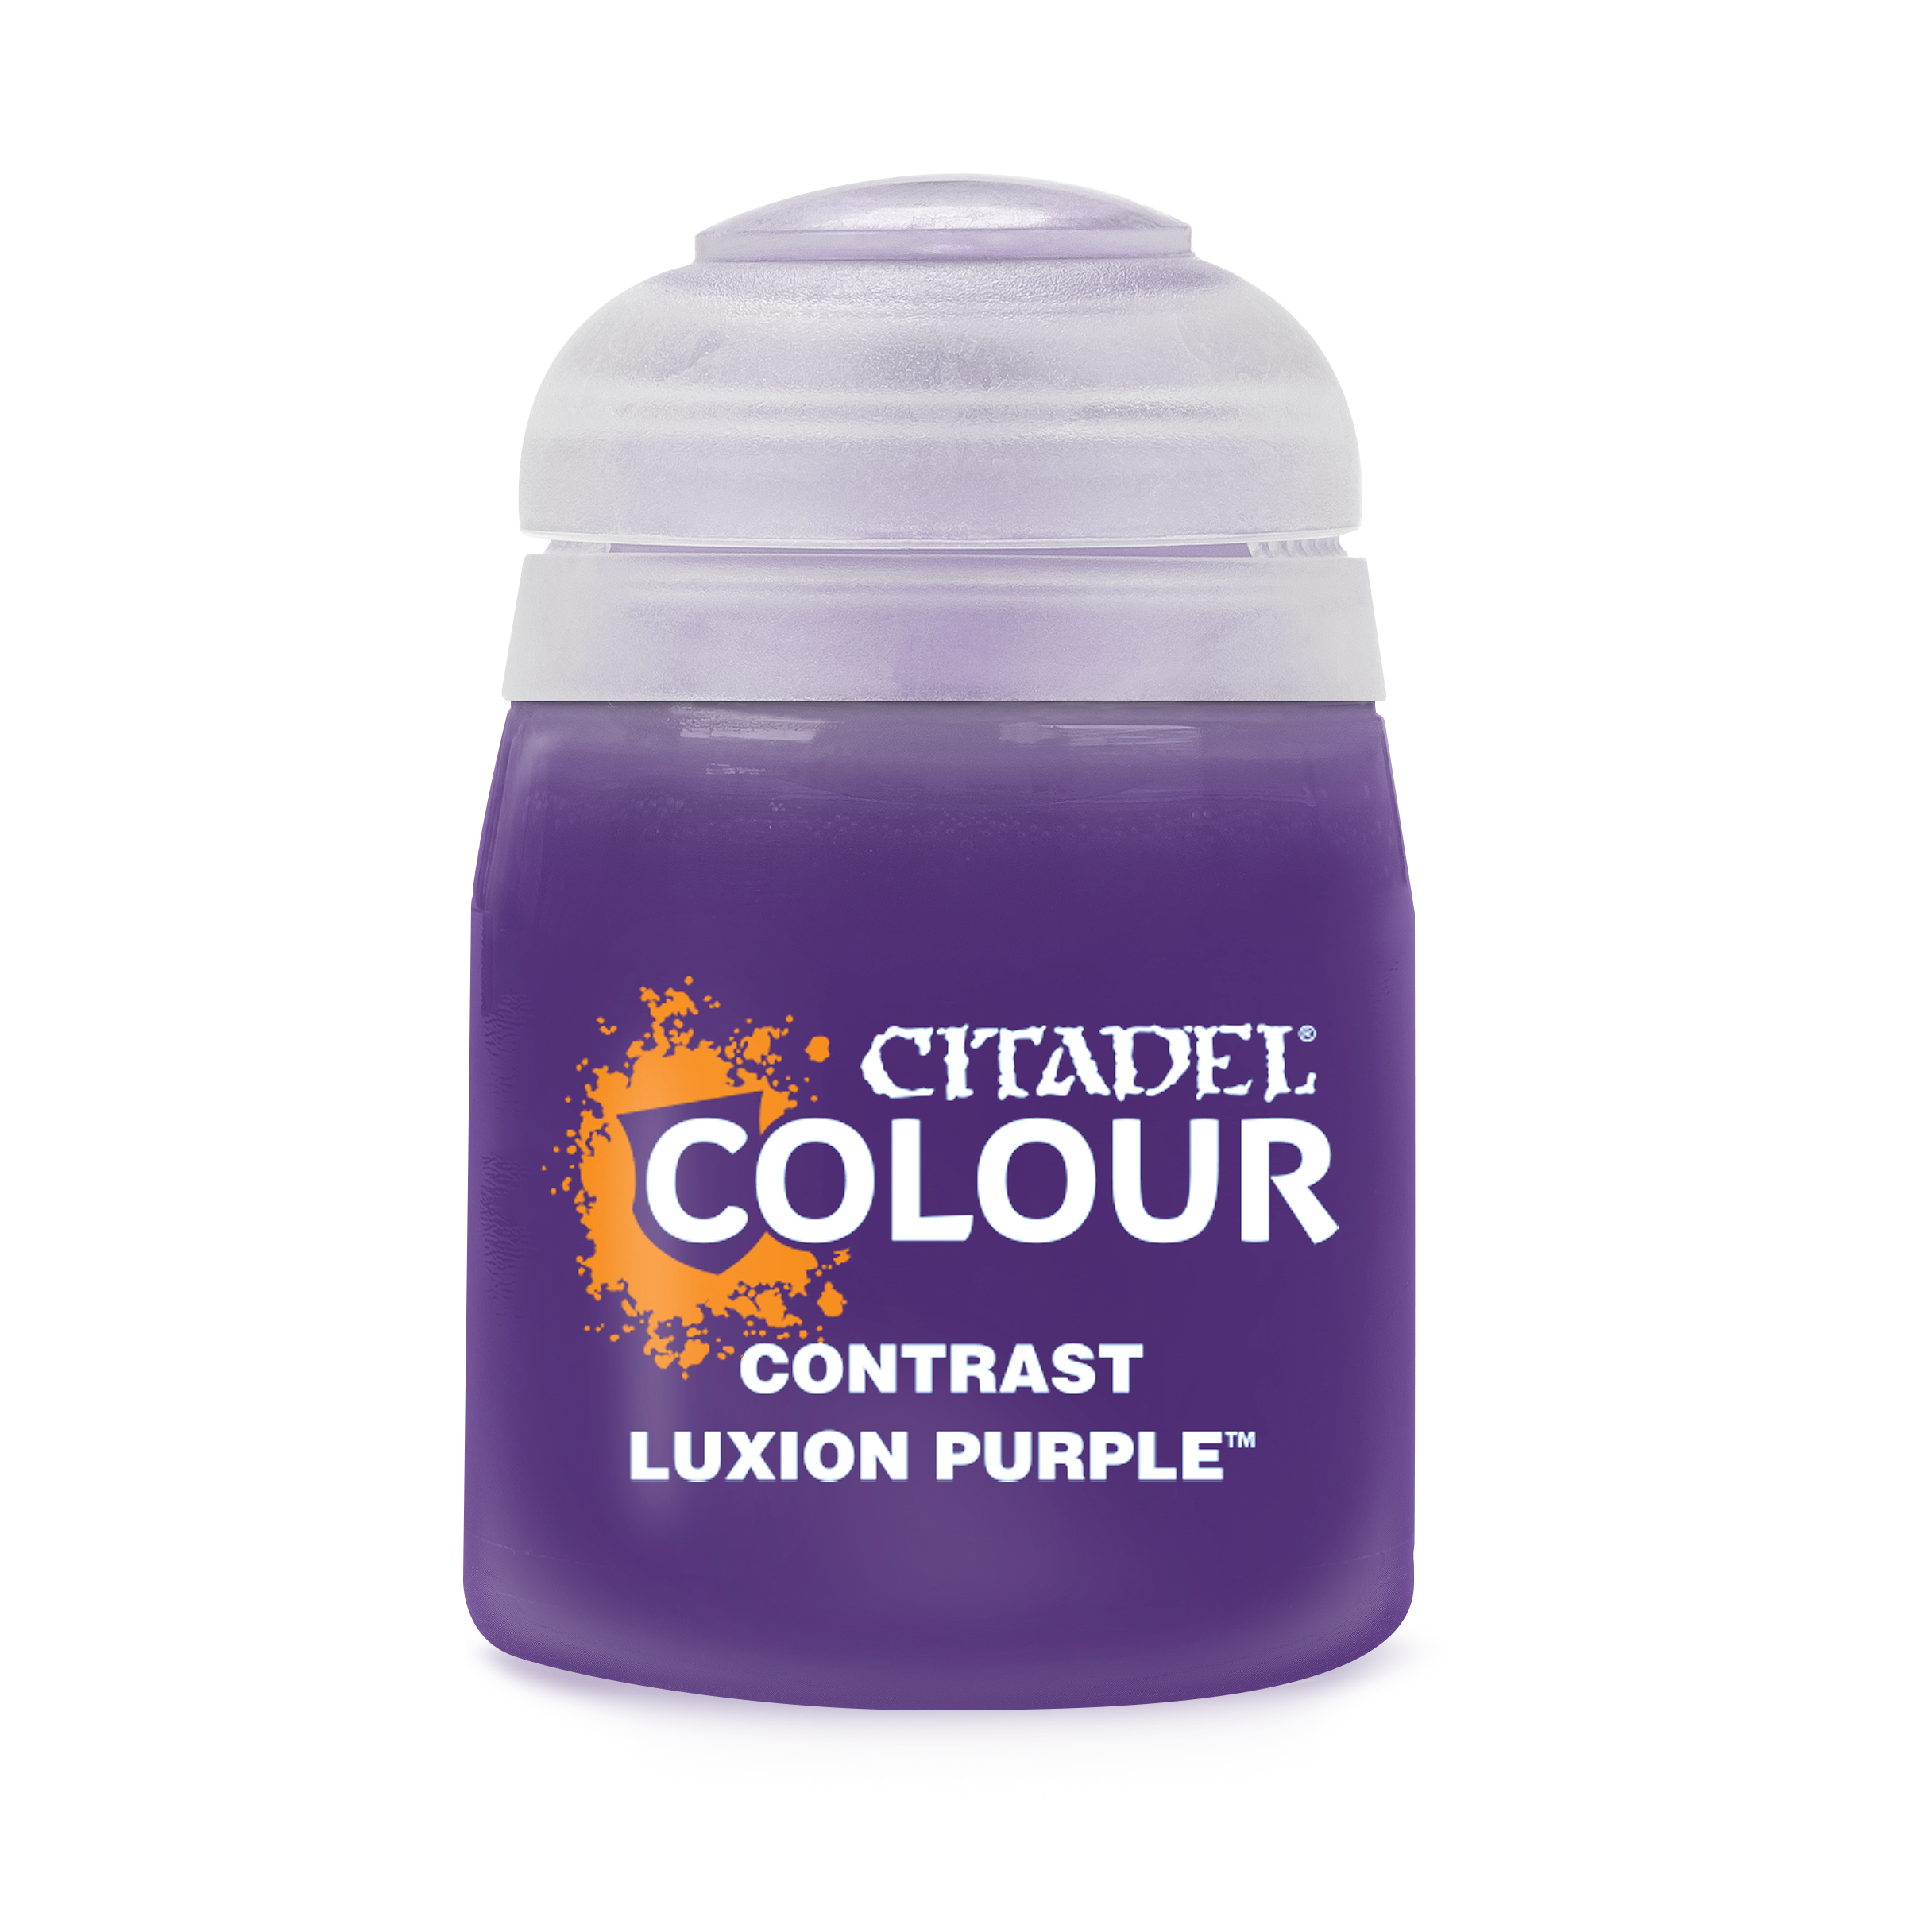 Contrast - Luxion Purple | Boutique FDB